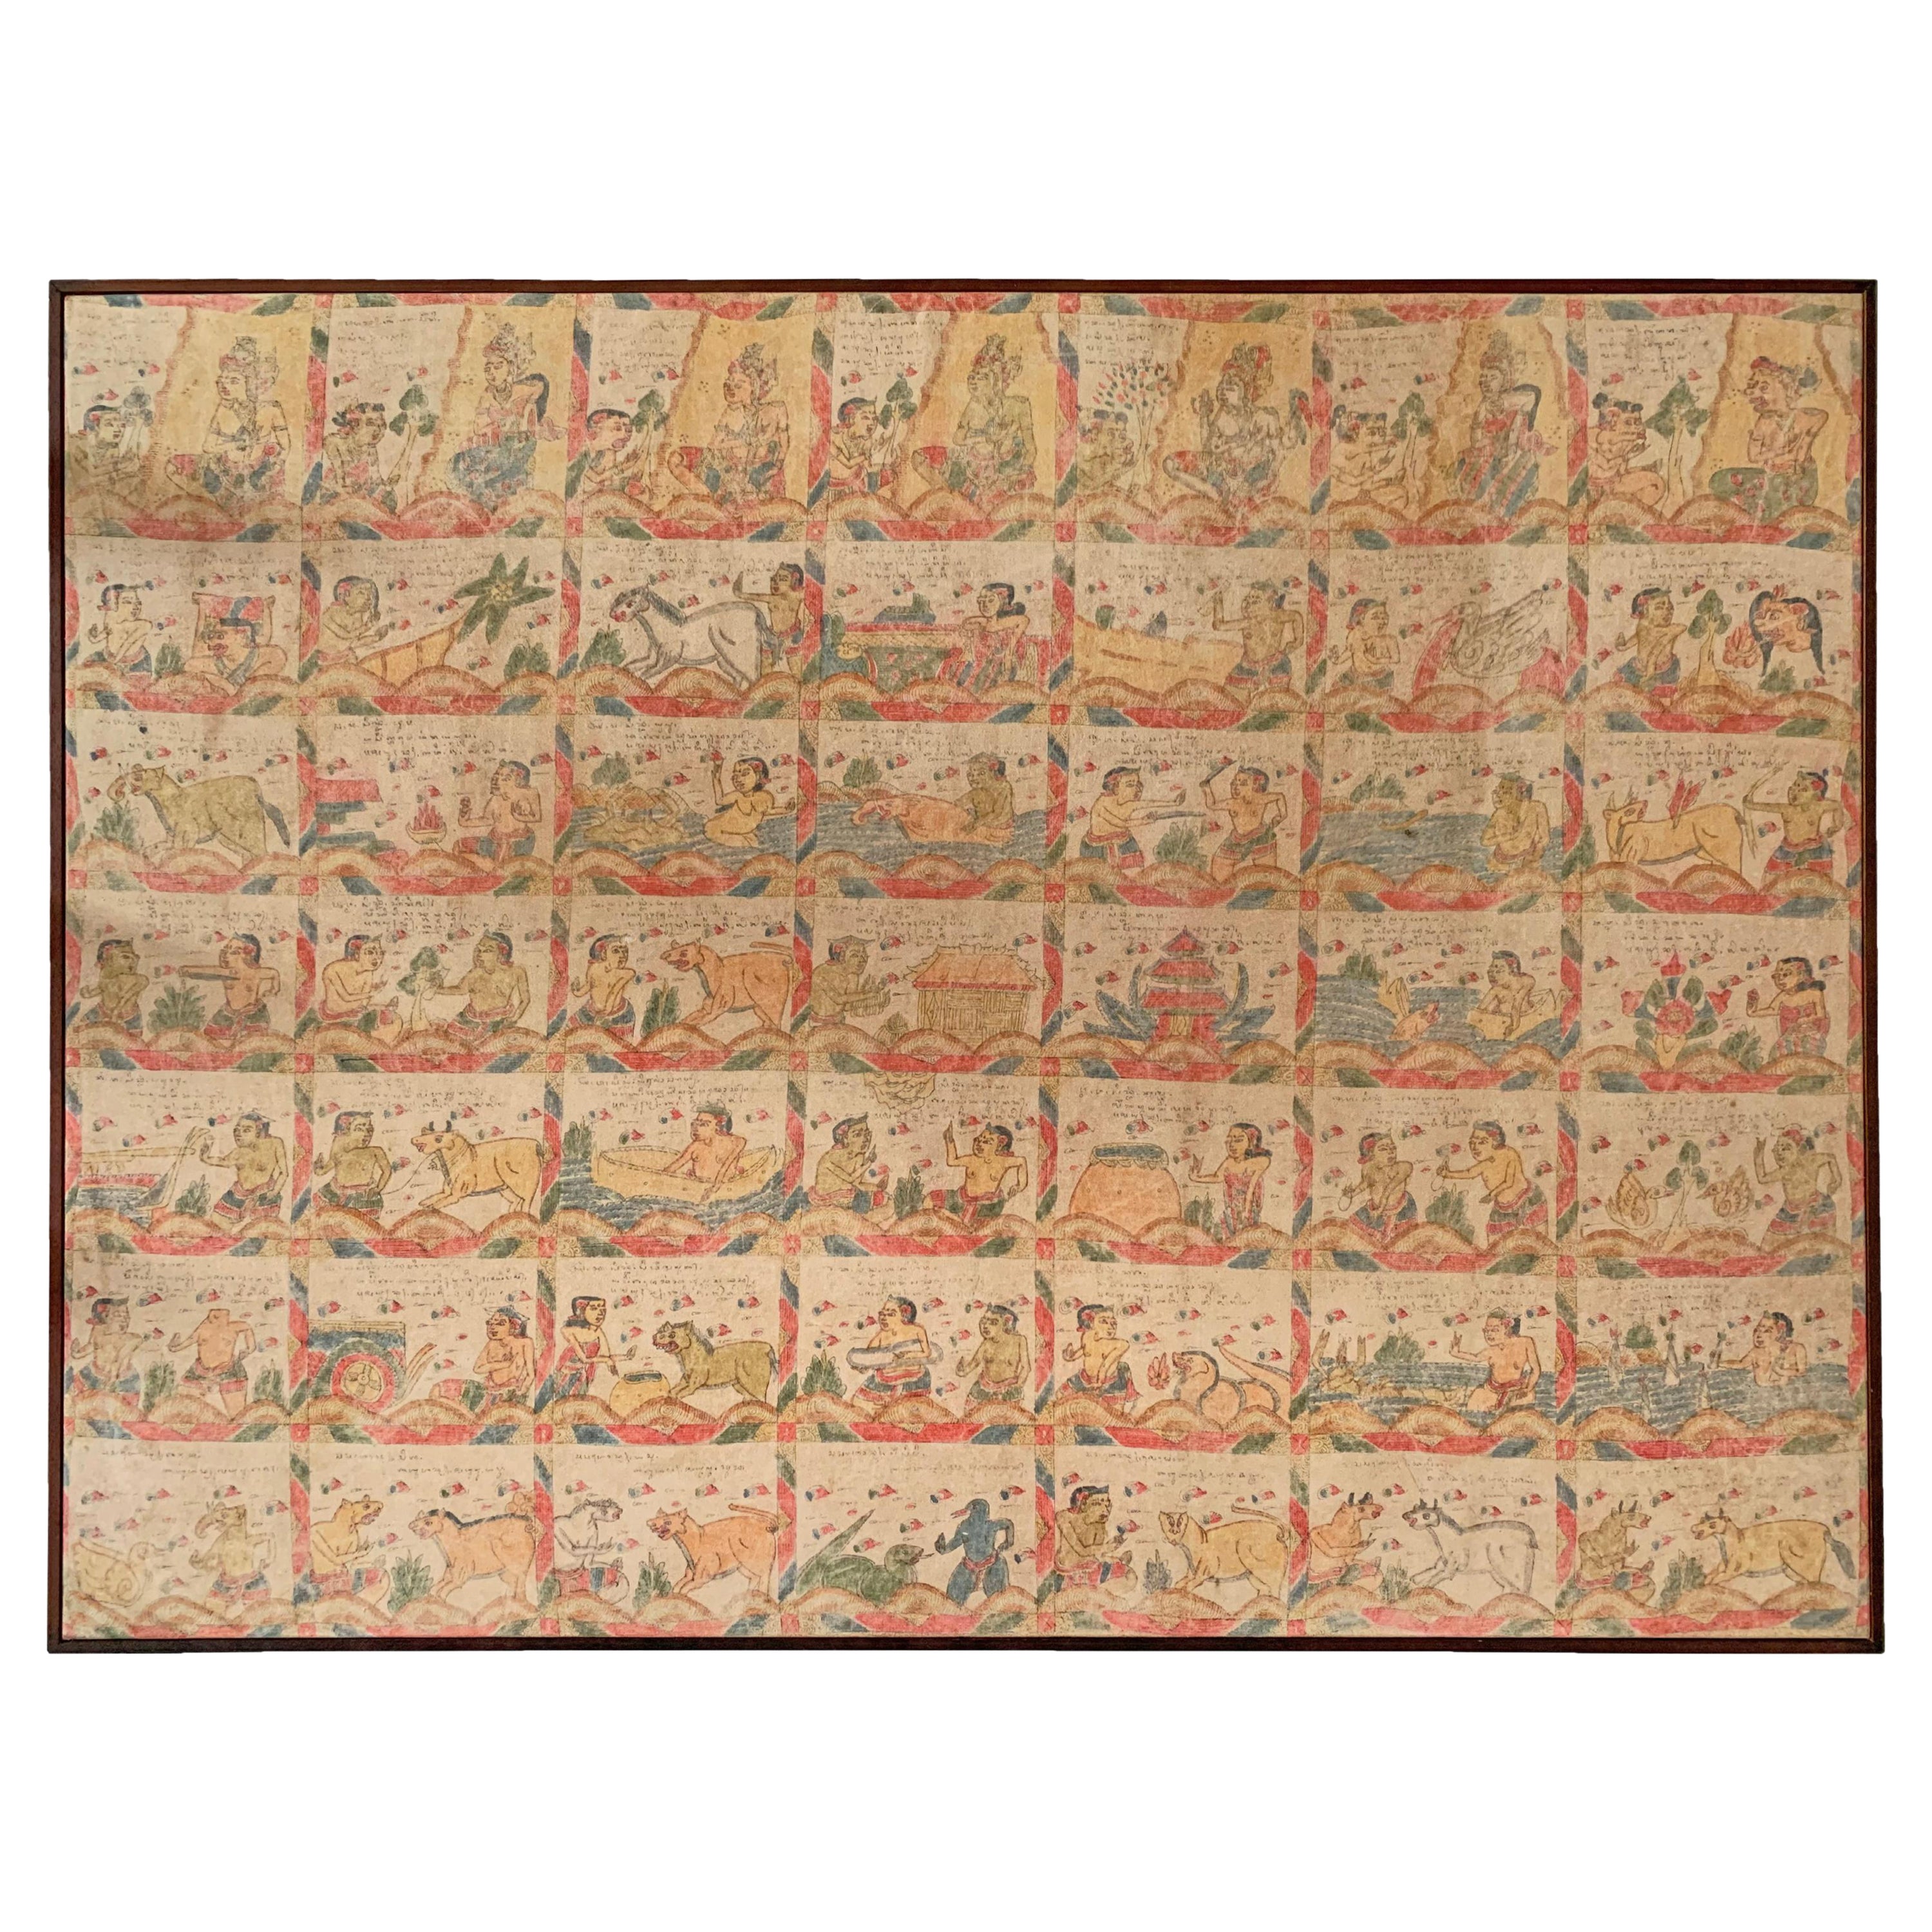 Bali Hindu Textile Framed 'Kamasan' Painting, Indonesia, Early 20th Century